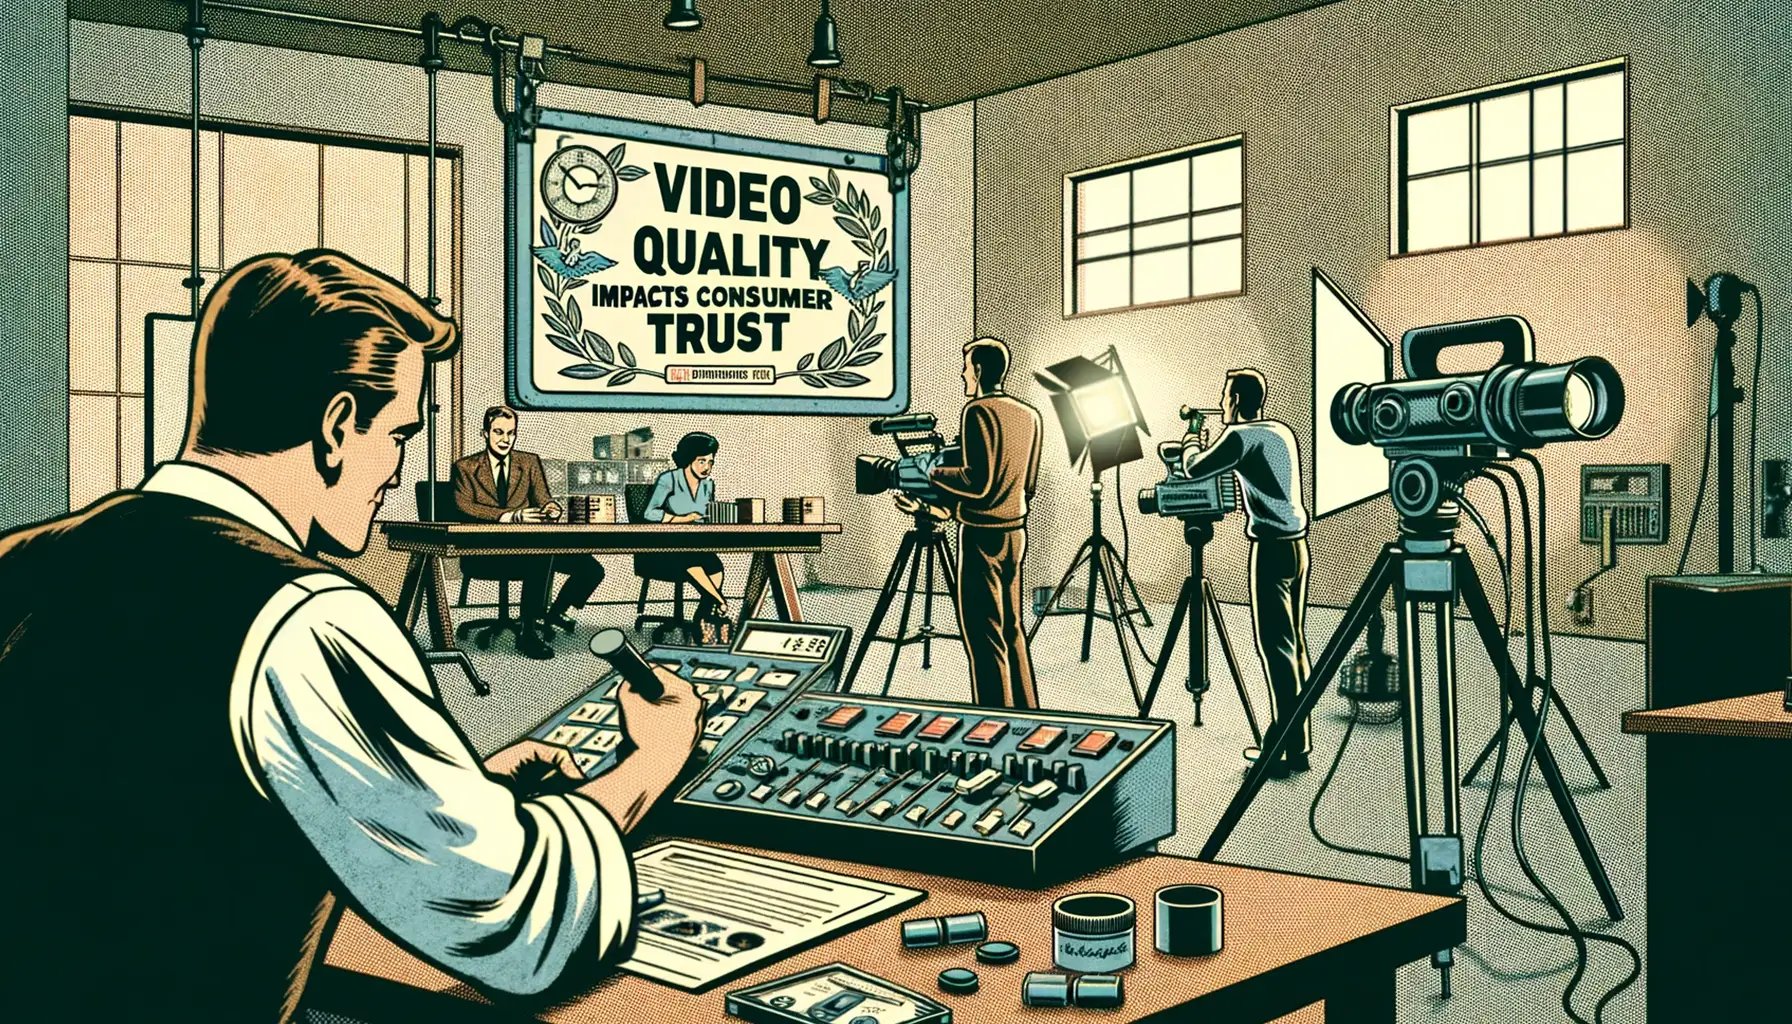 Video Quality Impacts Consumer Trust